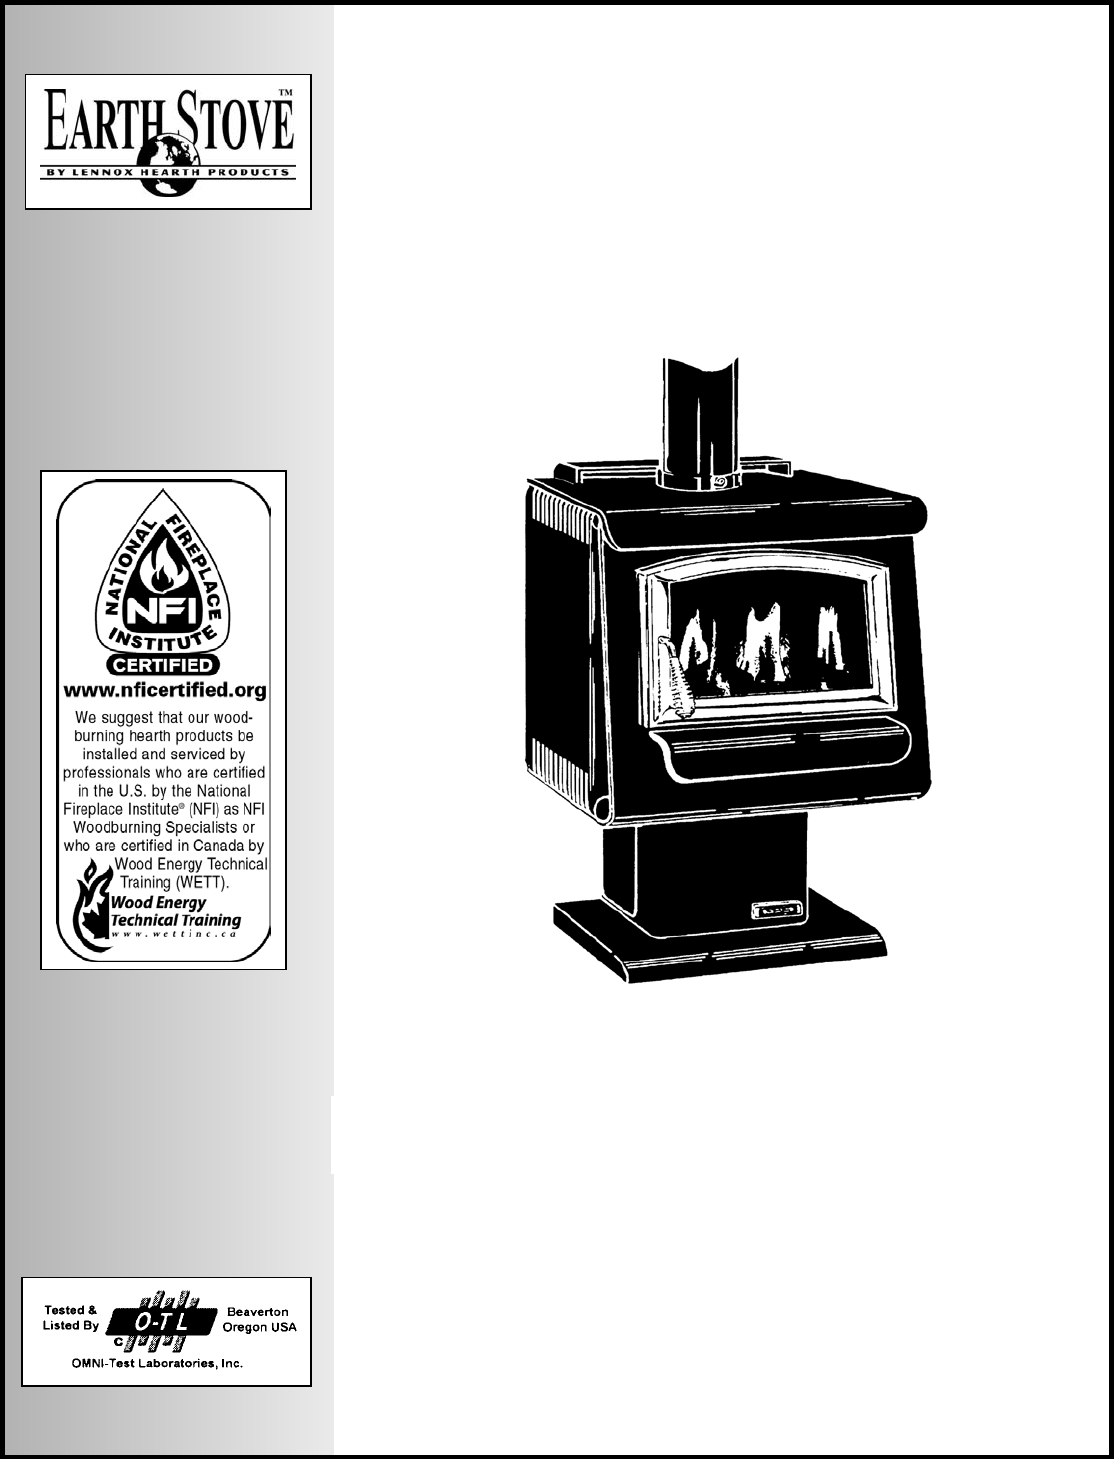 Earth stove pellet stove manual